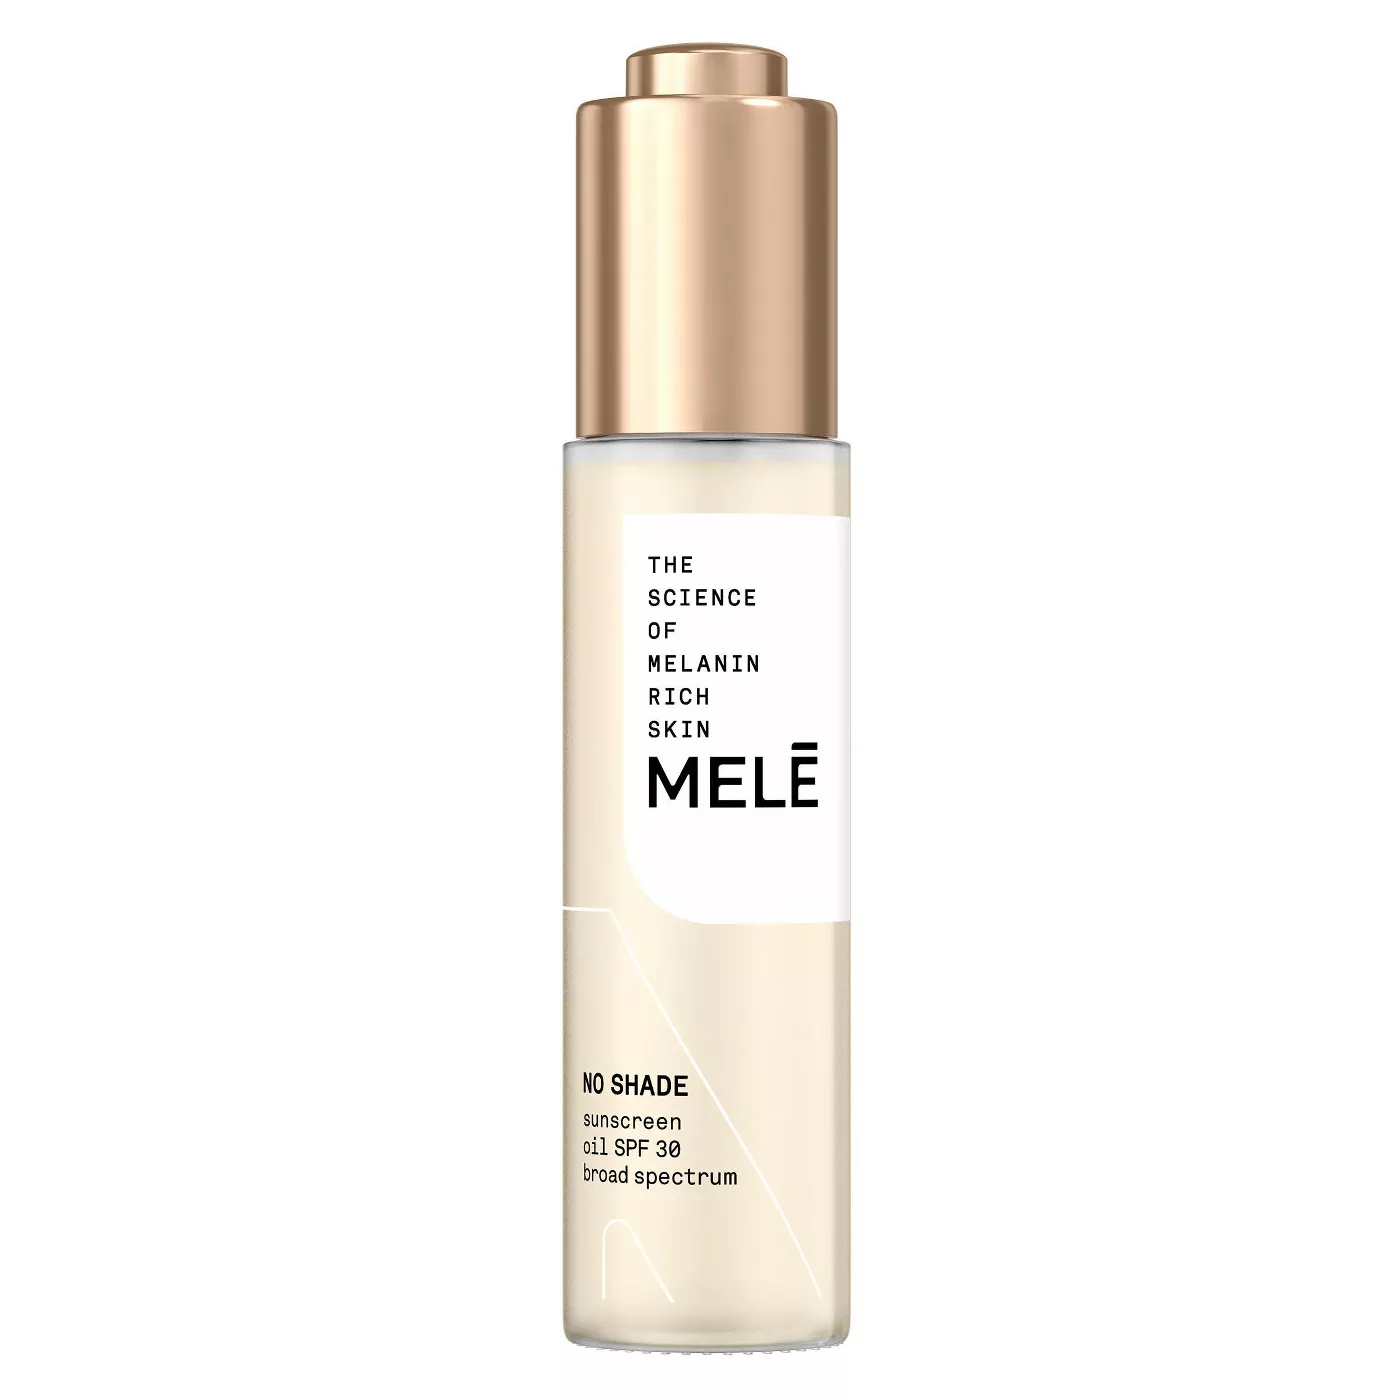 Mele No Shade Sunscreen Oil Broad Spectrum for Melanin Rich Skin - SPF 30 - 1 fl oz - image 1 of 8